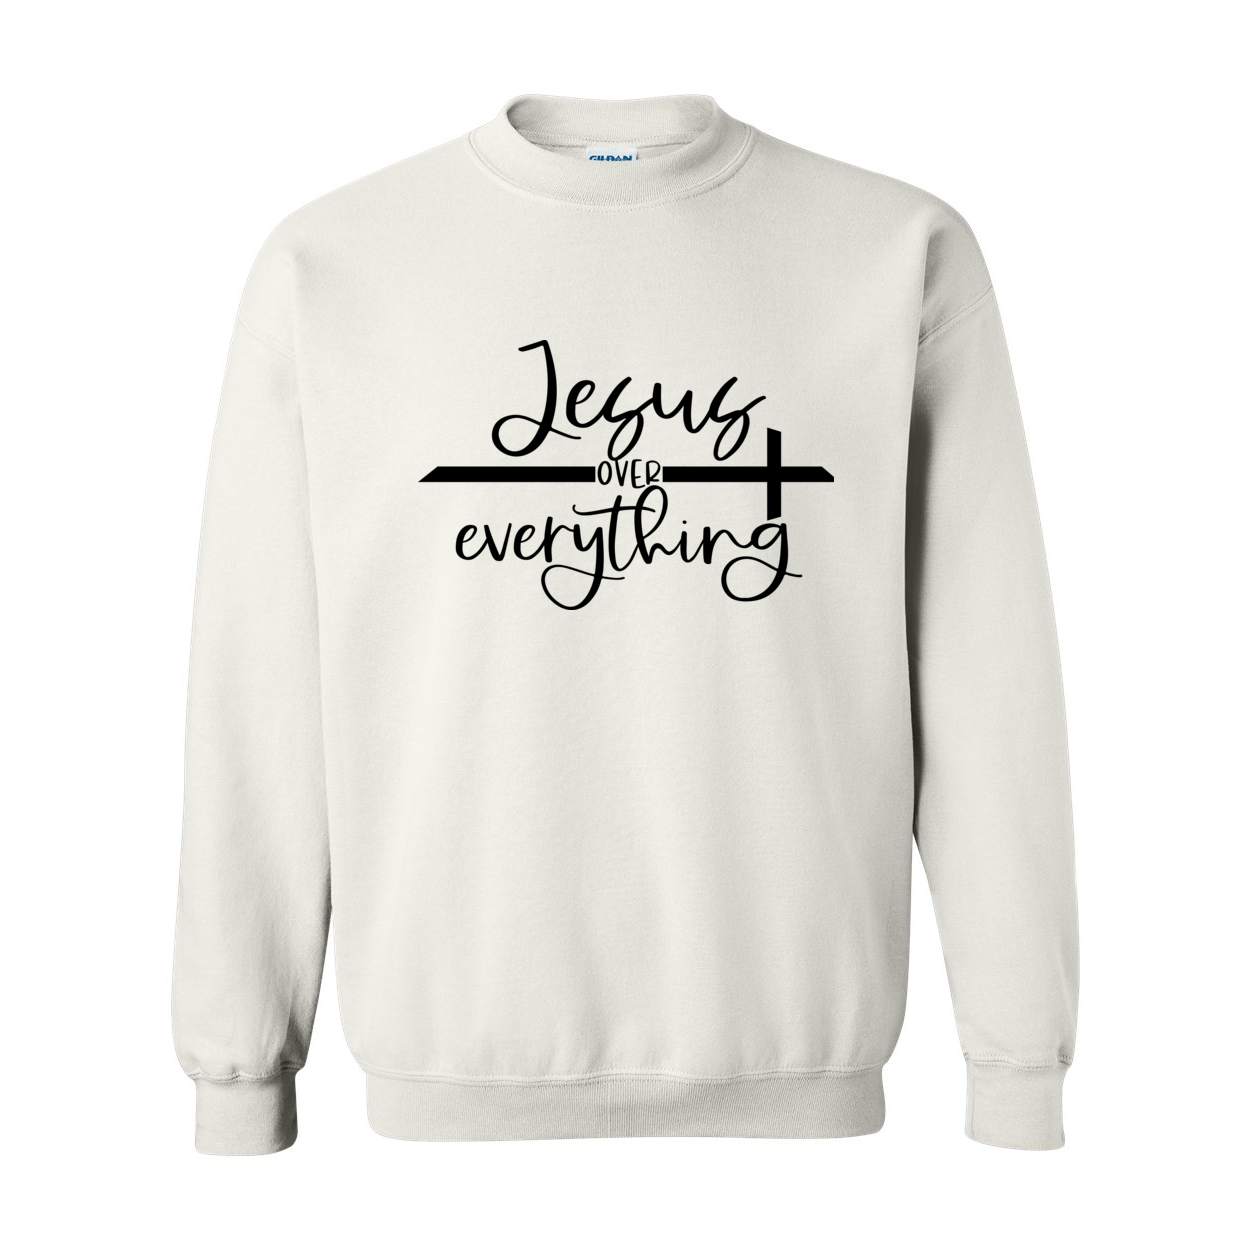 Jesus Over Everything Crewneck Sweatshirt